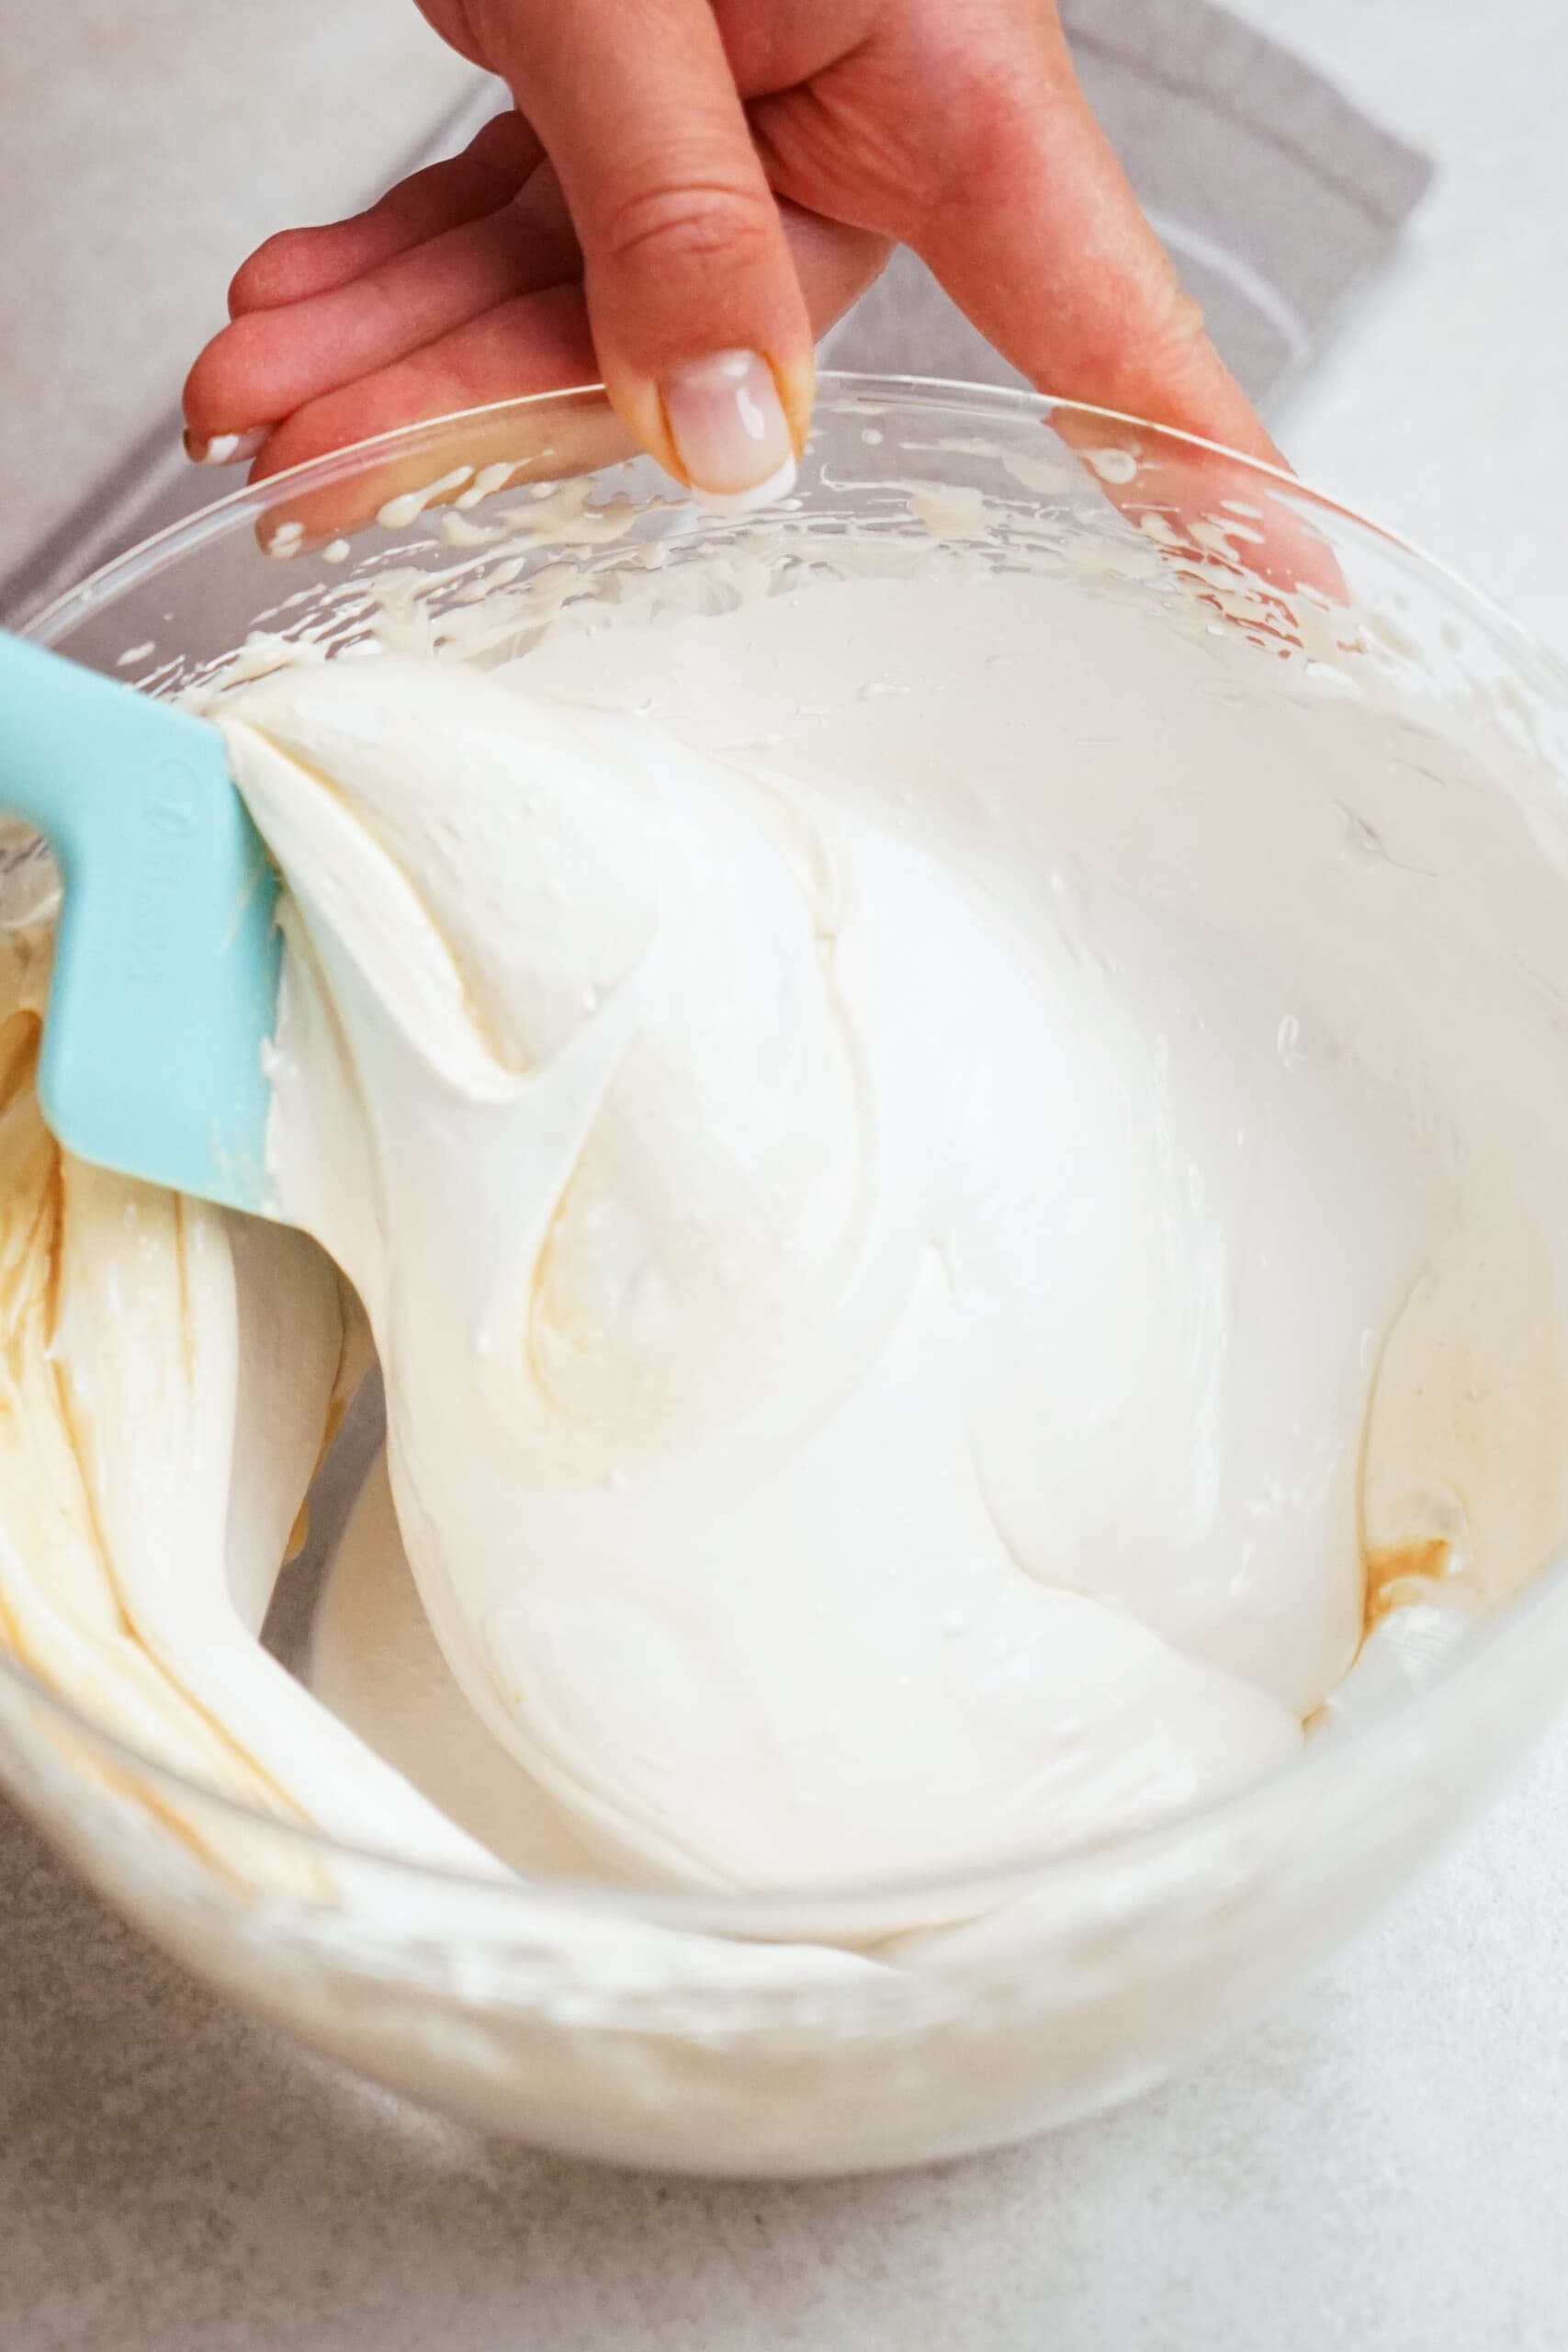 combining vanilla with a rubber scraper